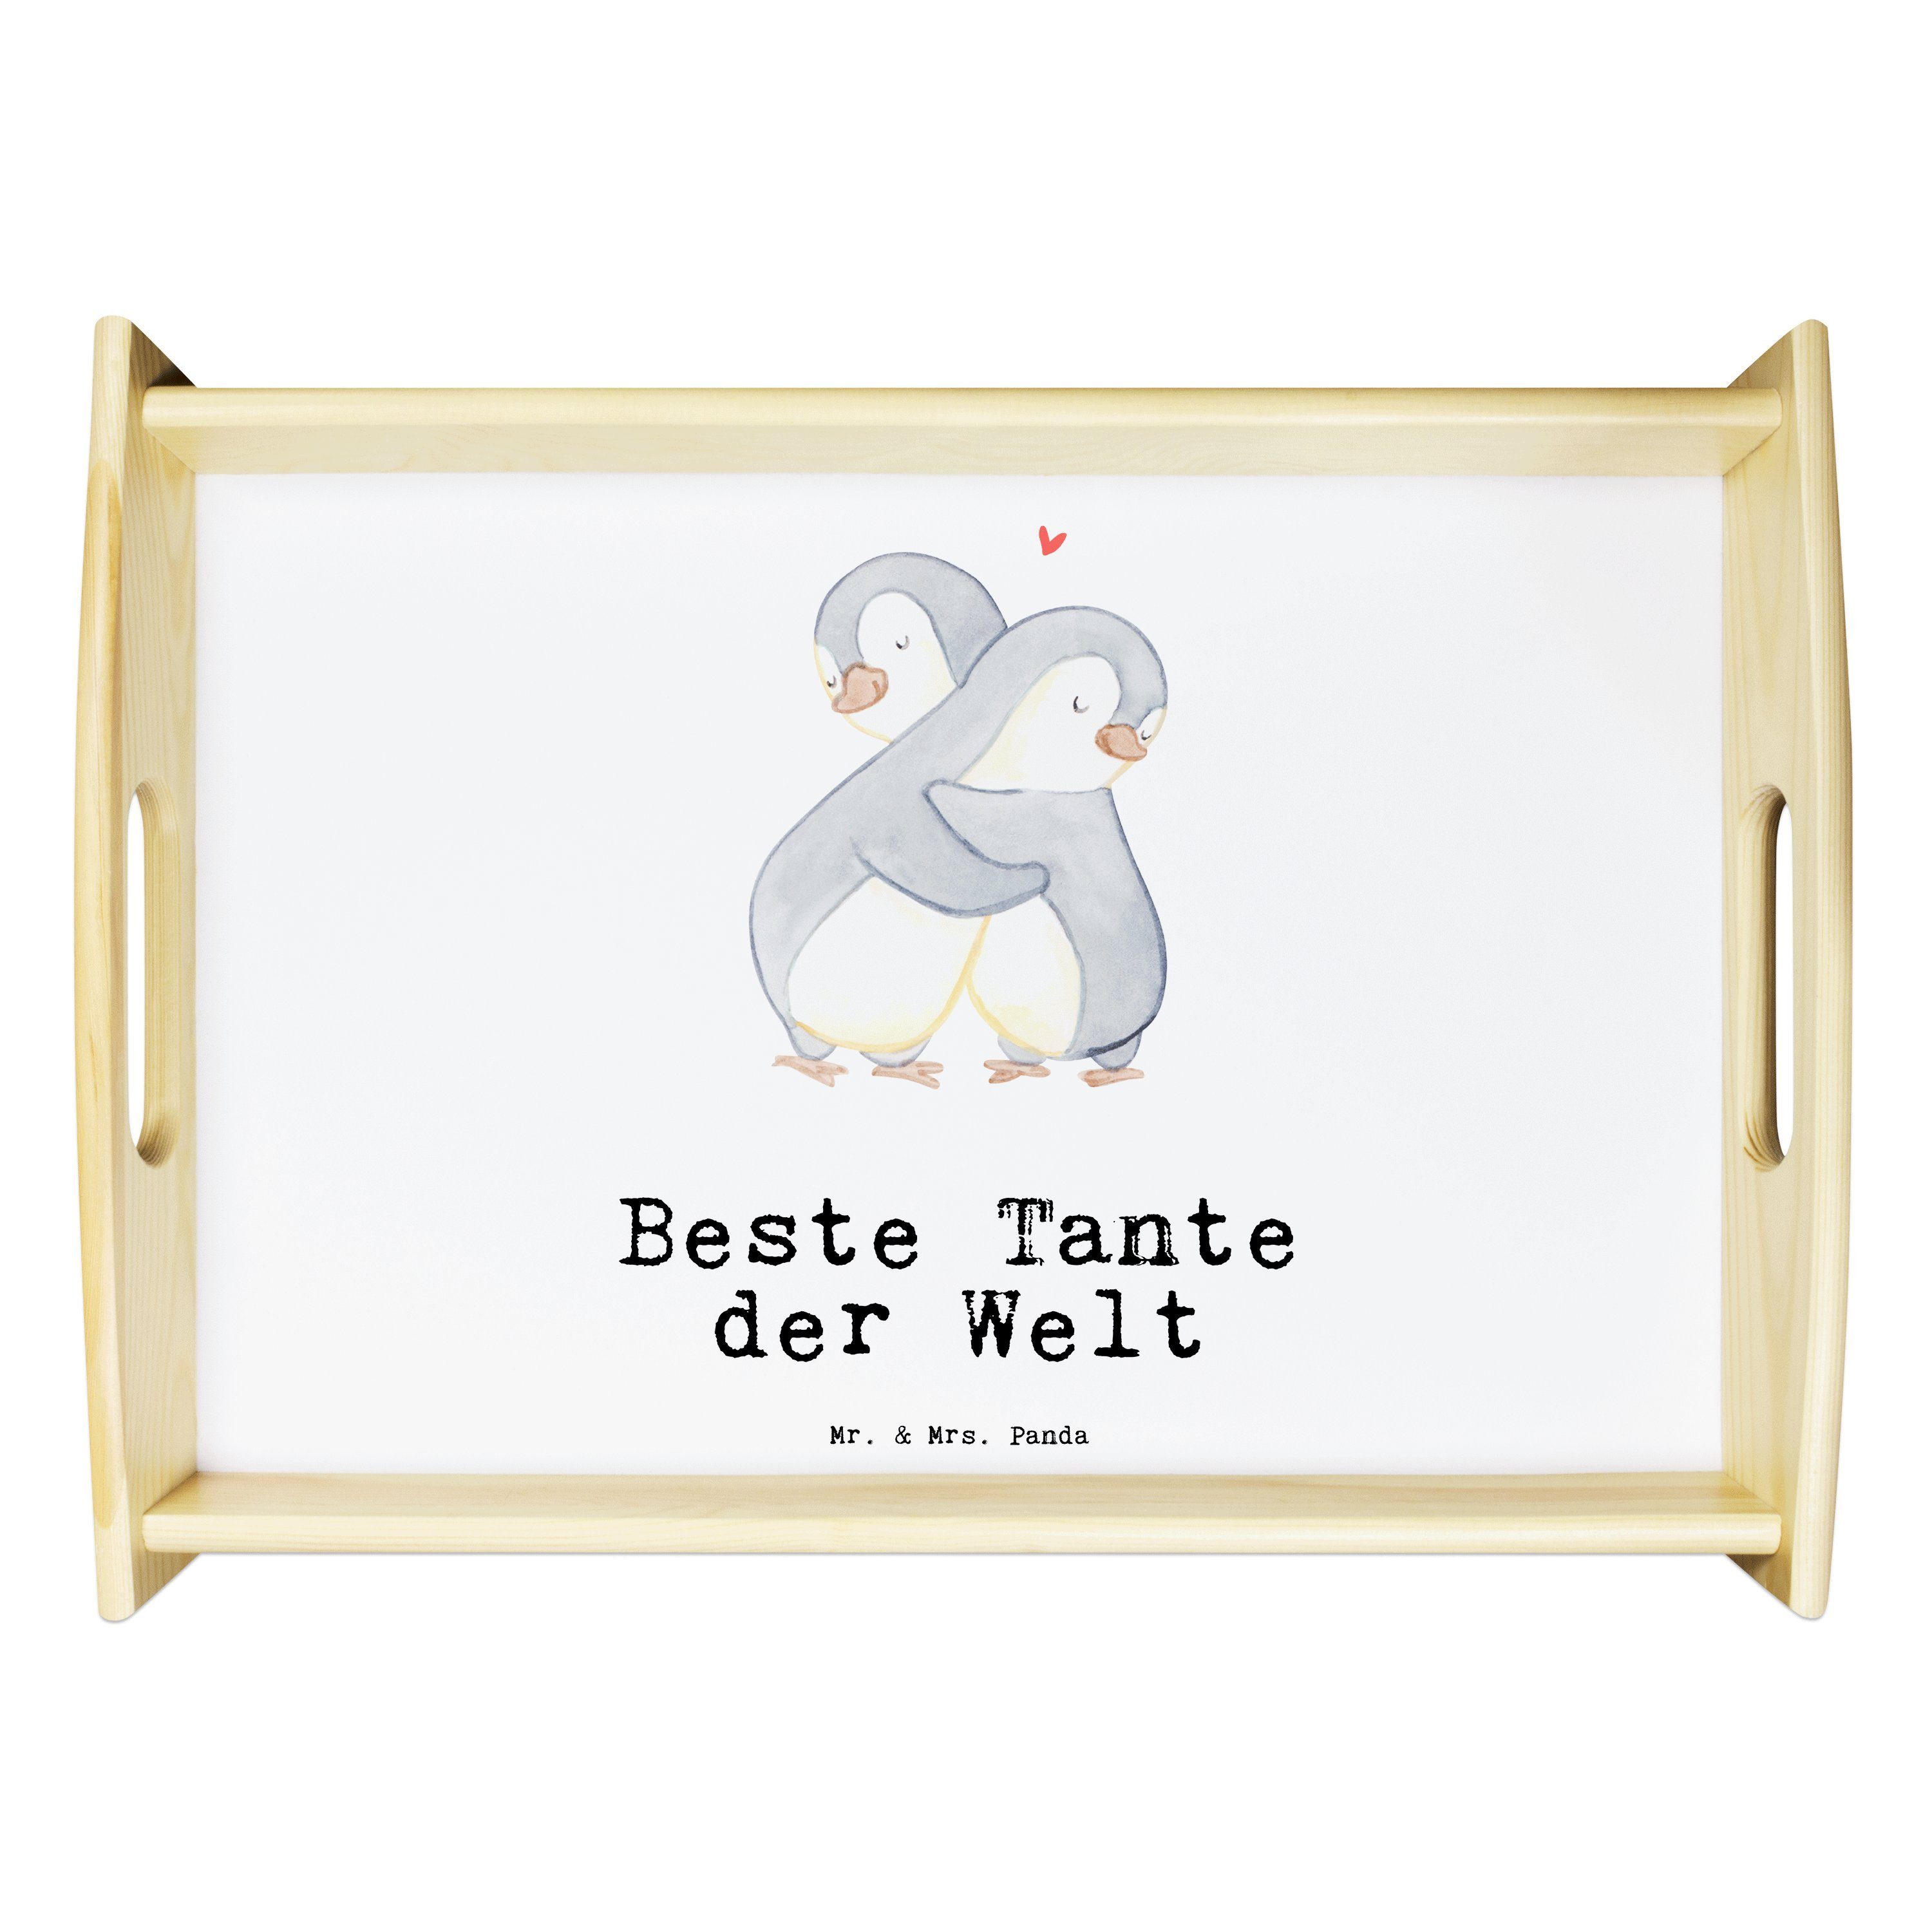 Mrs. - Taufe, Tante Gebur, Tablett, & lasiert, Mr. Panda Beste Tablett Welt Geschenk, der Echtholz - Weiß (1-tlg) Pinguin